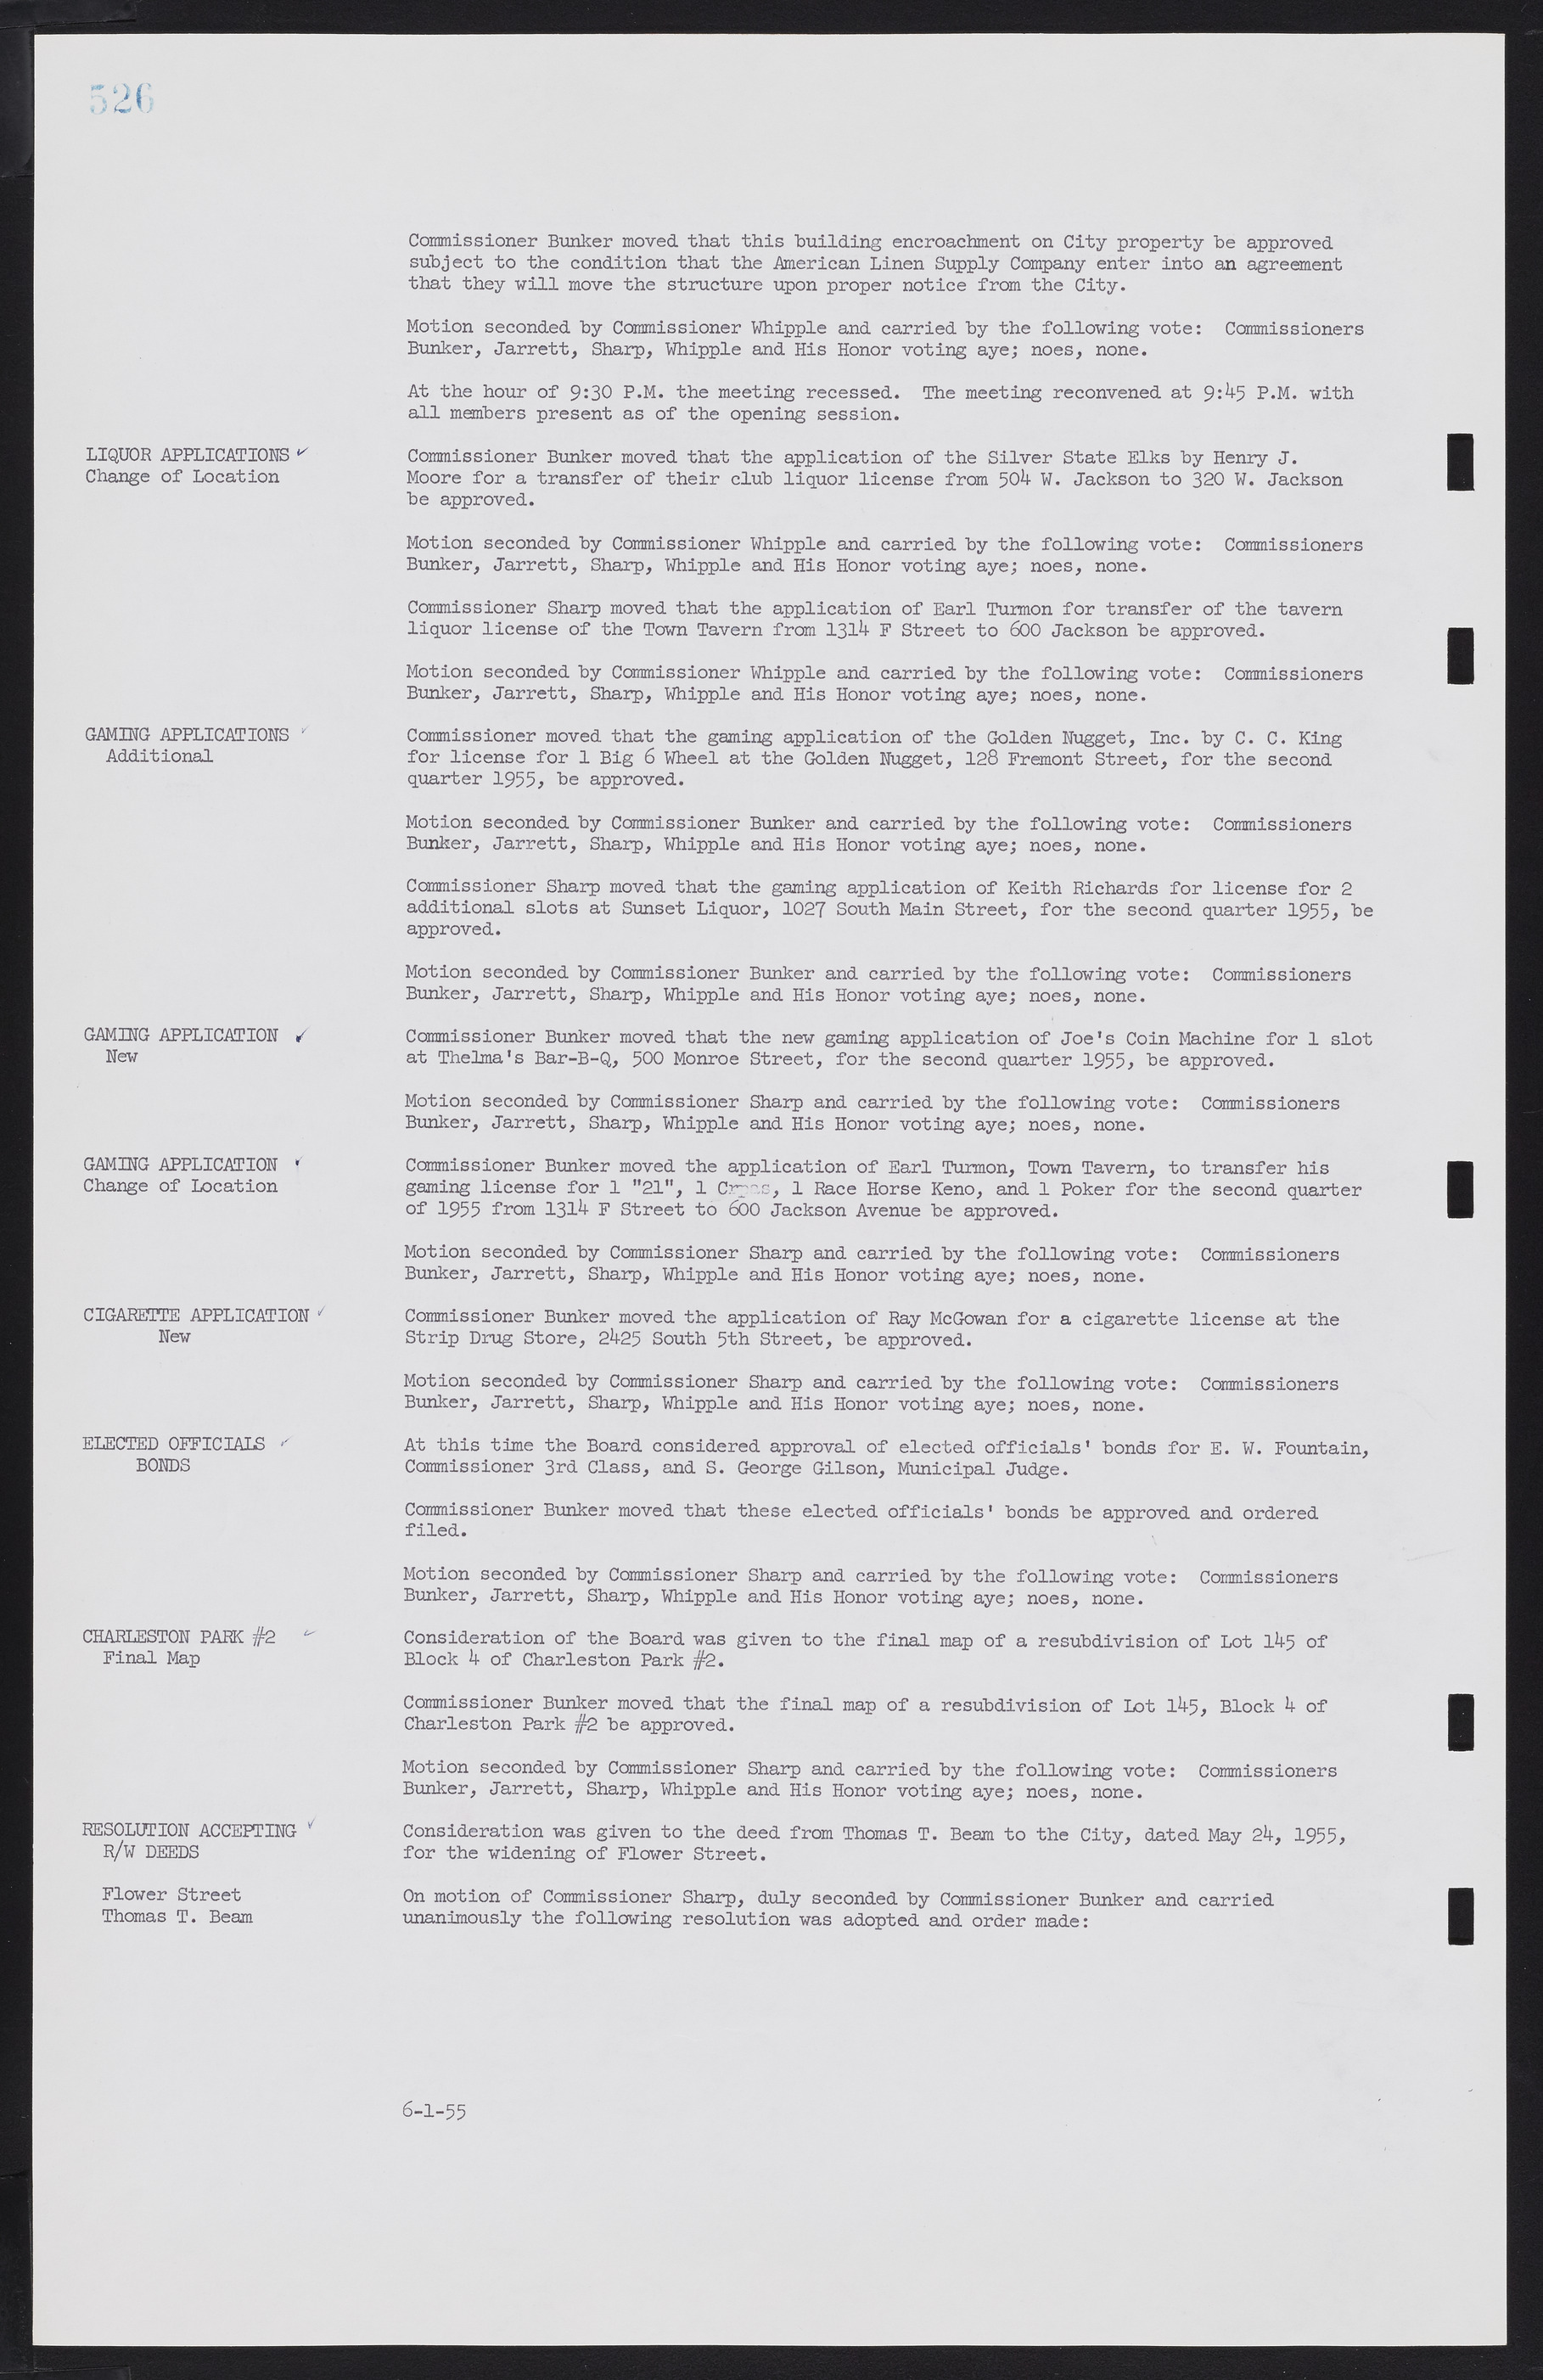 Las Vegas City Commission Minutes, February 17, 1954 to September 21, 1955, lvc000009-532